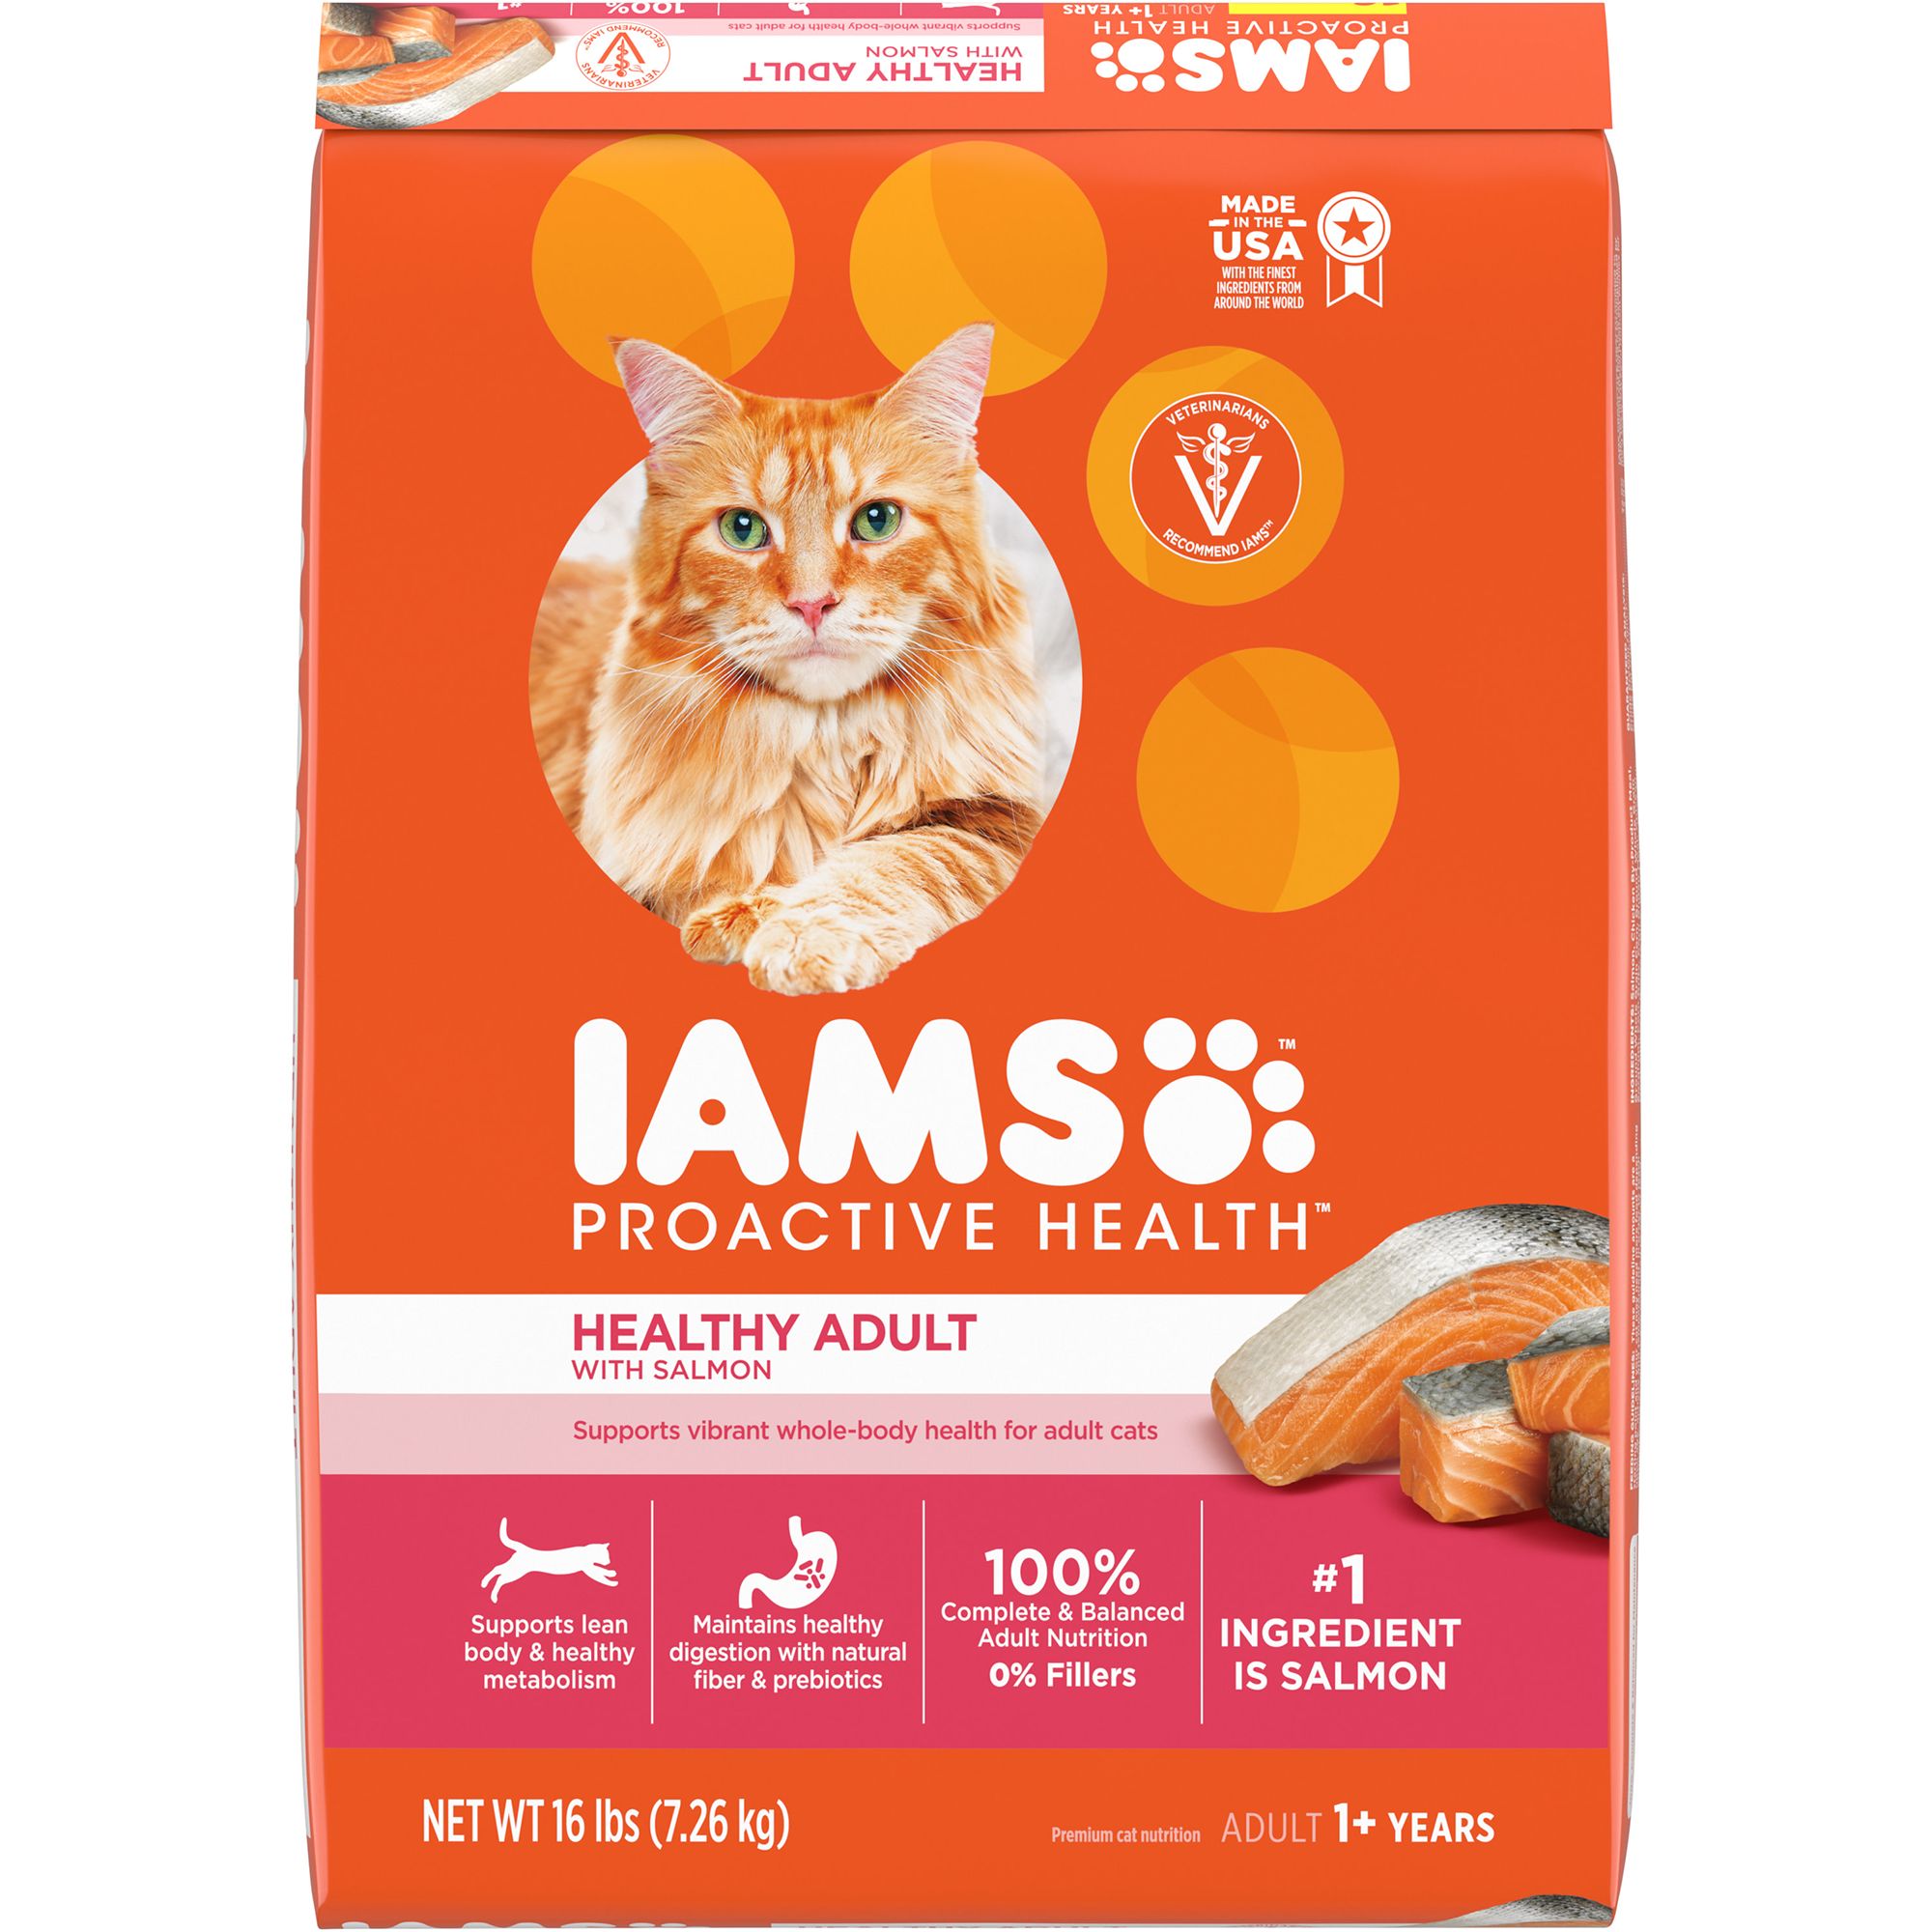 IAMS&trade; Proactive Health Adult Dry Cat Food - Healthy Adult, Salmon & Tuna